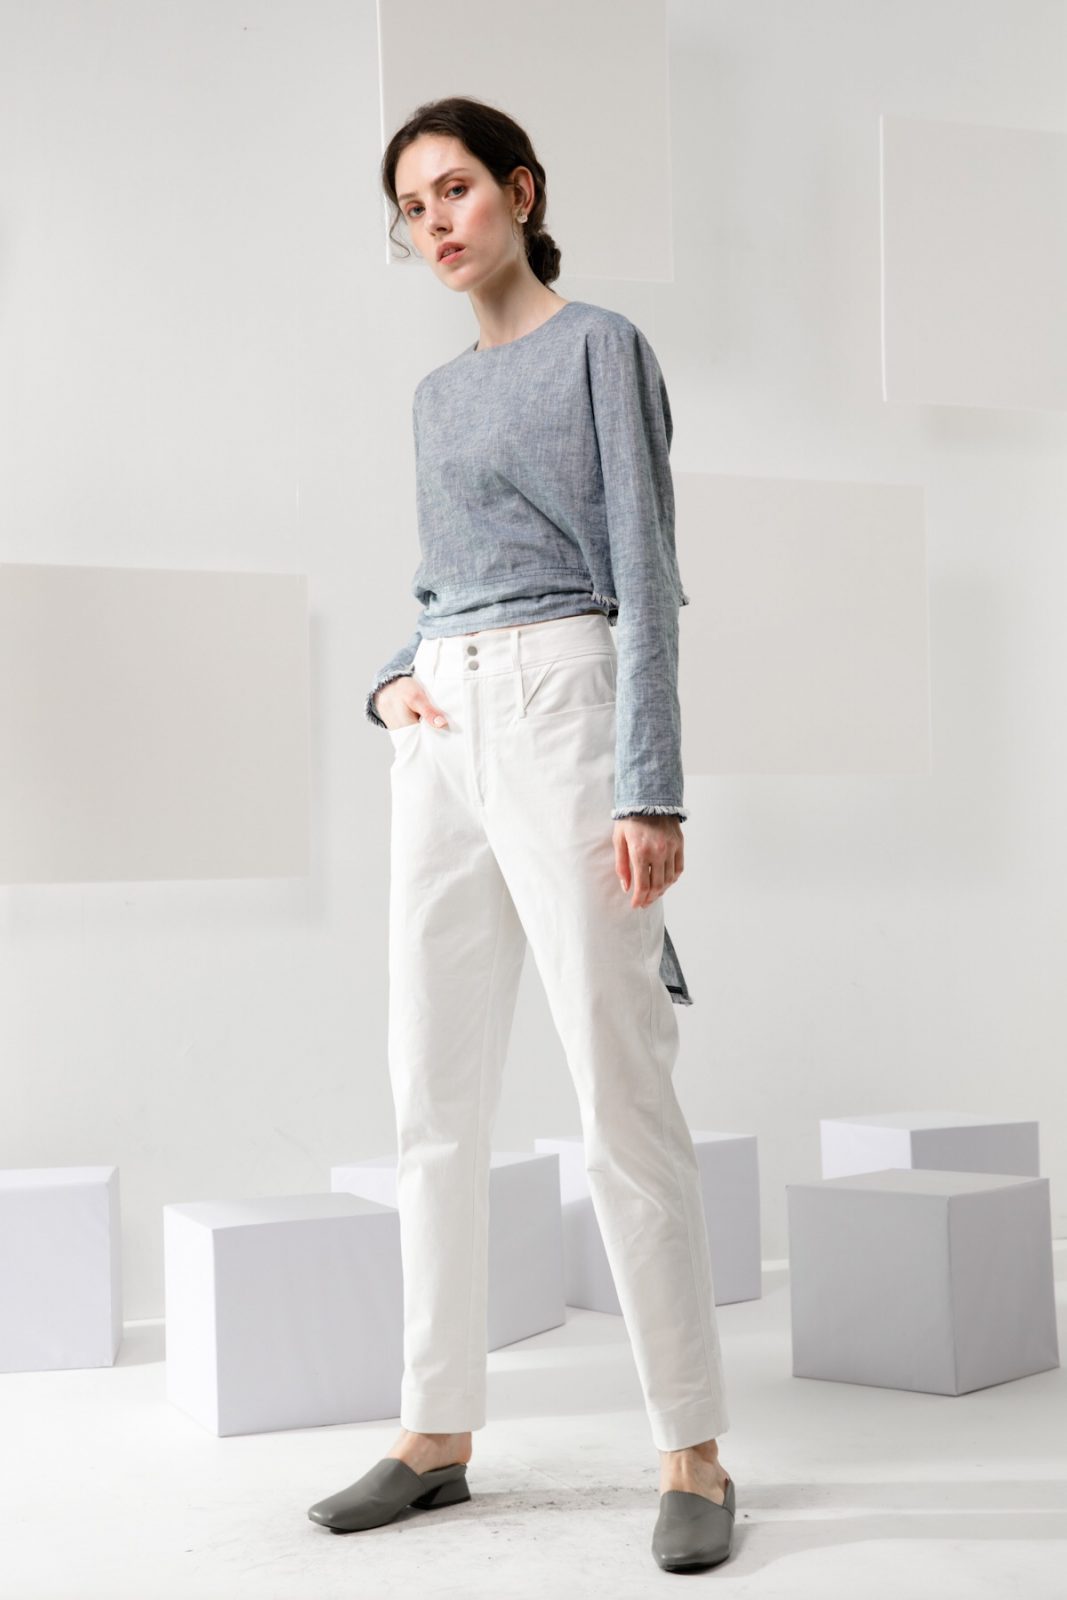 SKYE modern minimalist women clothing fashion Elise Pants white